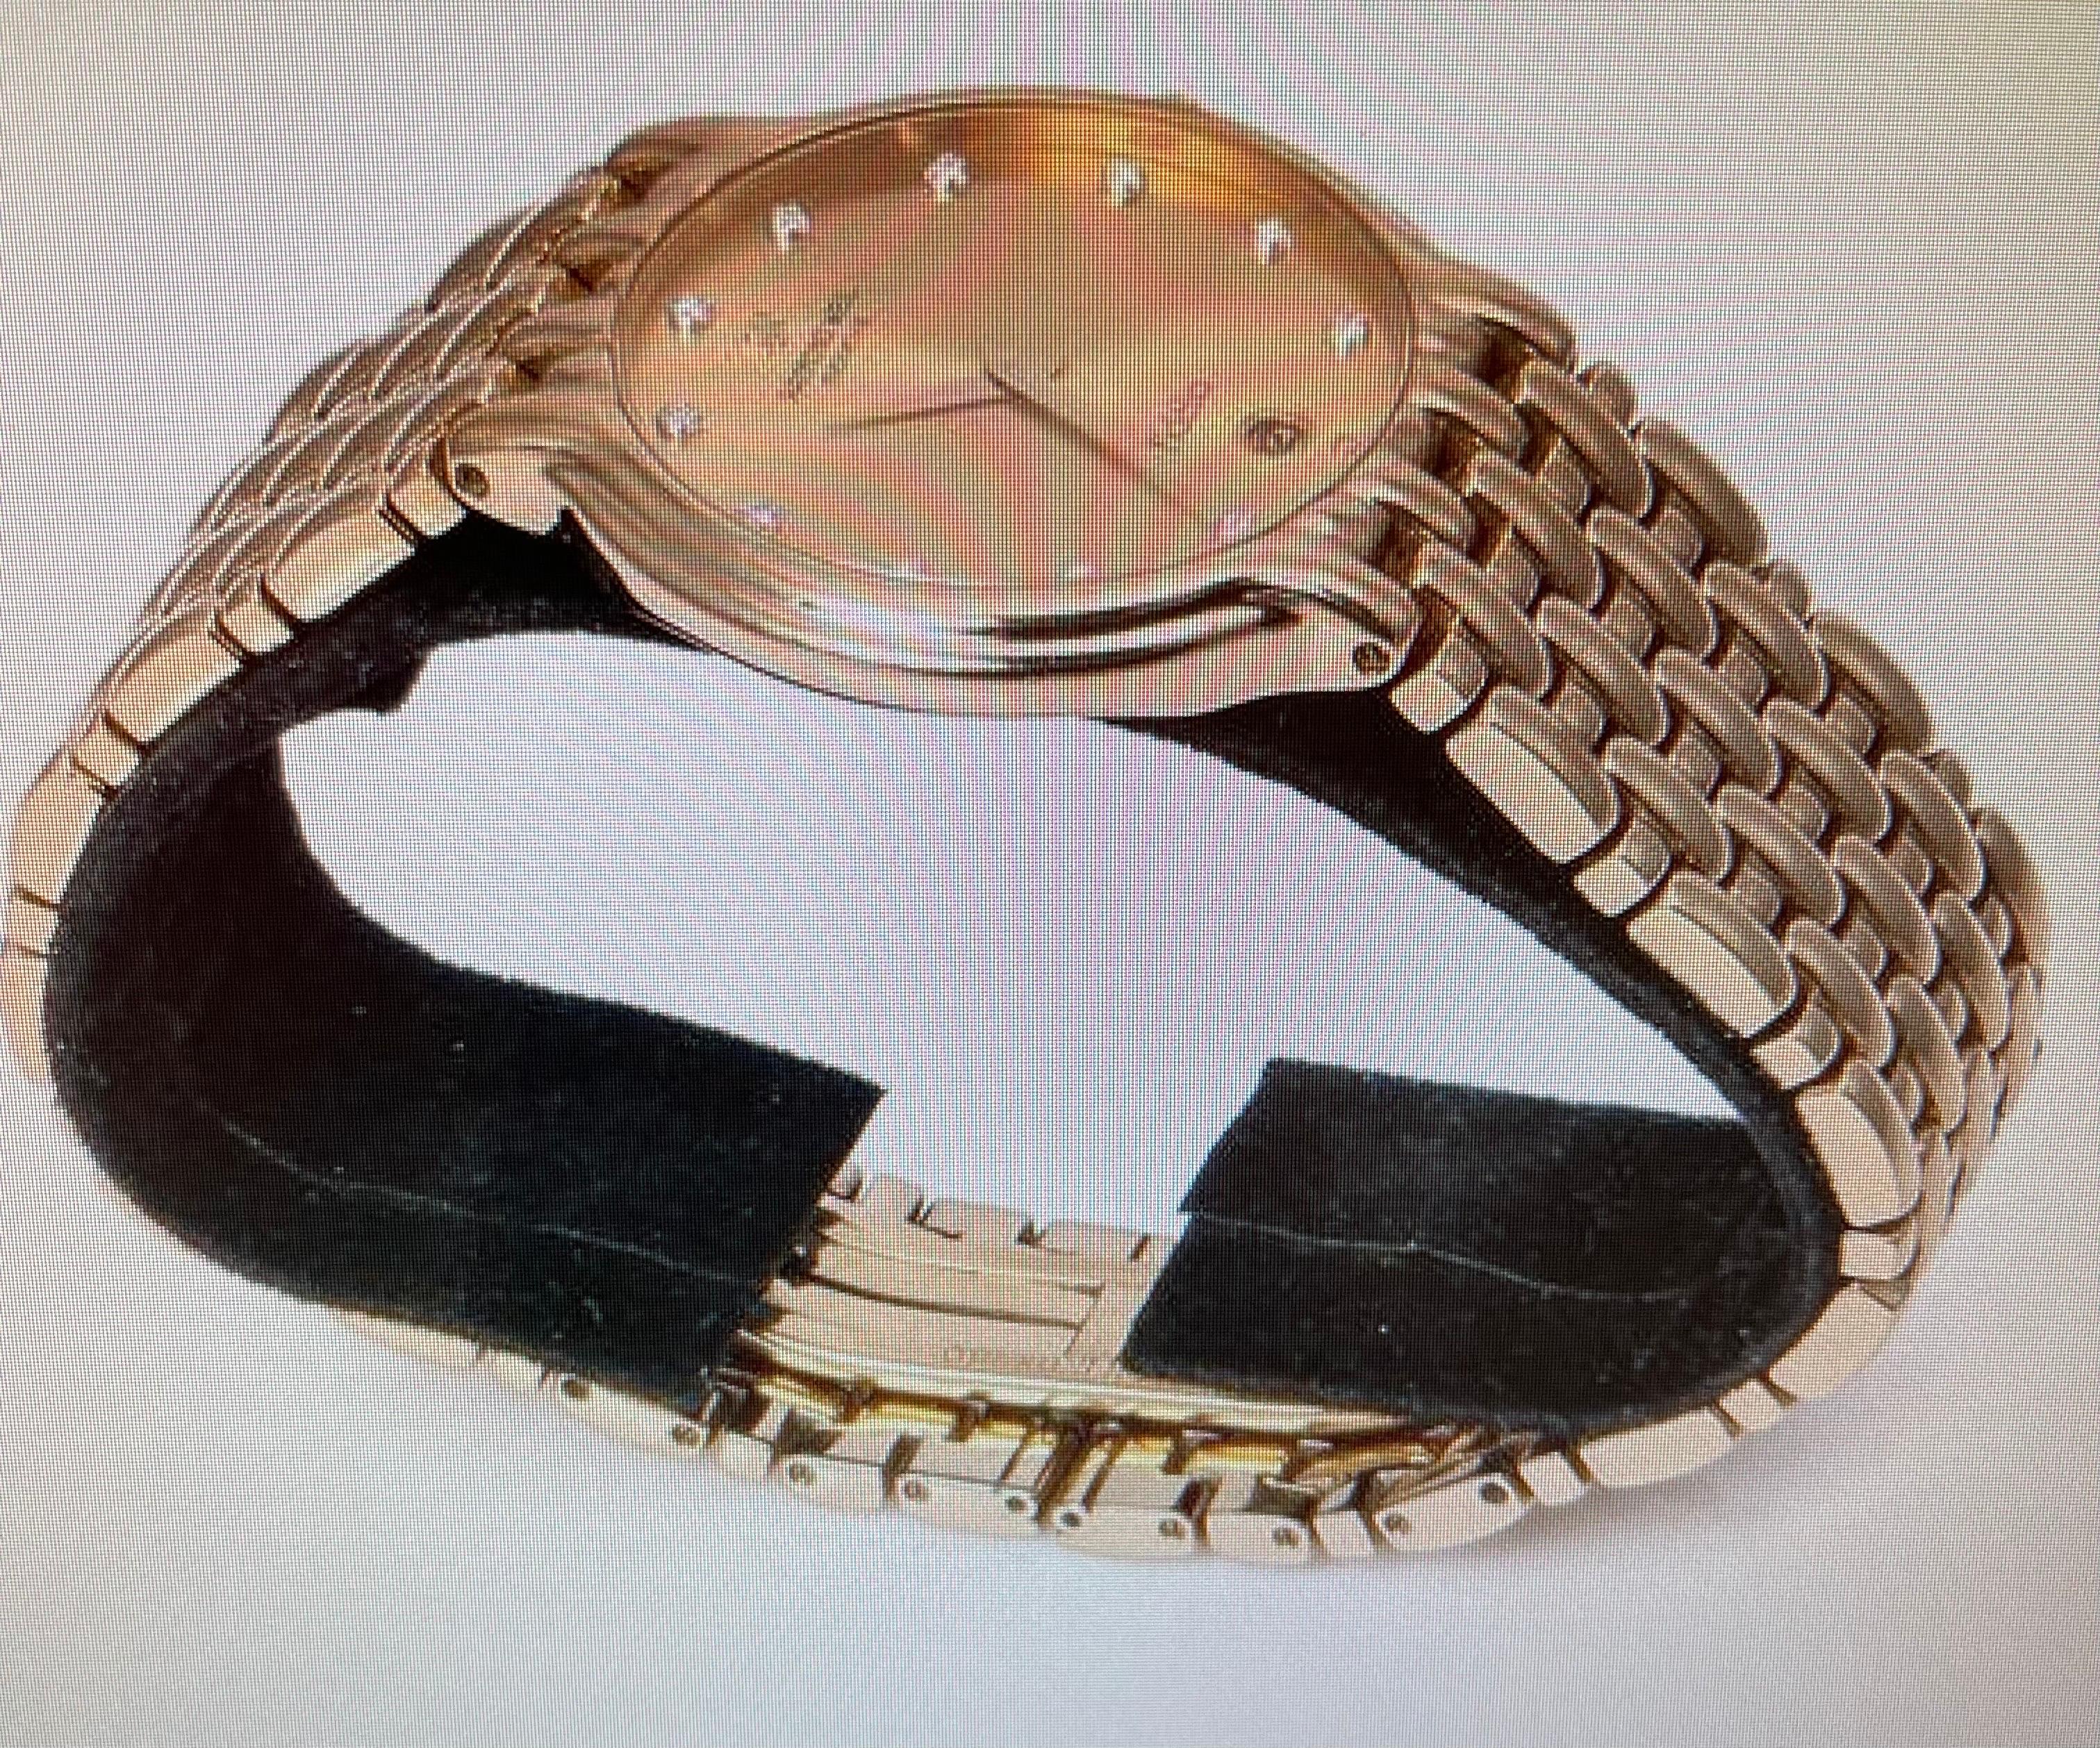 Raymond Weil Fidelio 18K Gold Electroplated Watch with Date & Diamonds